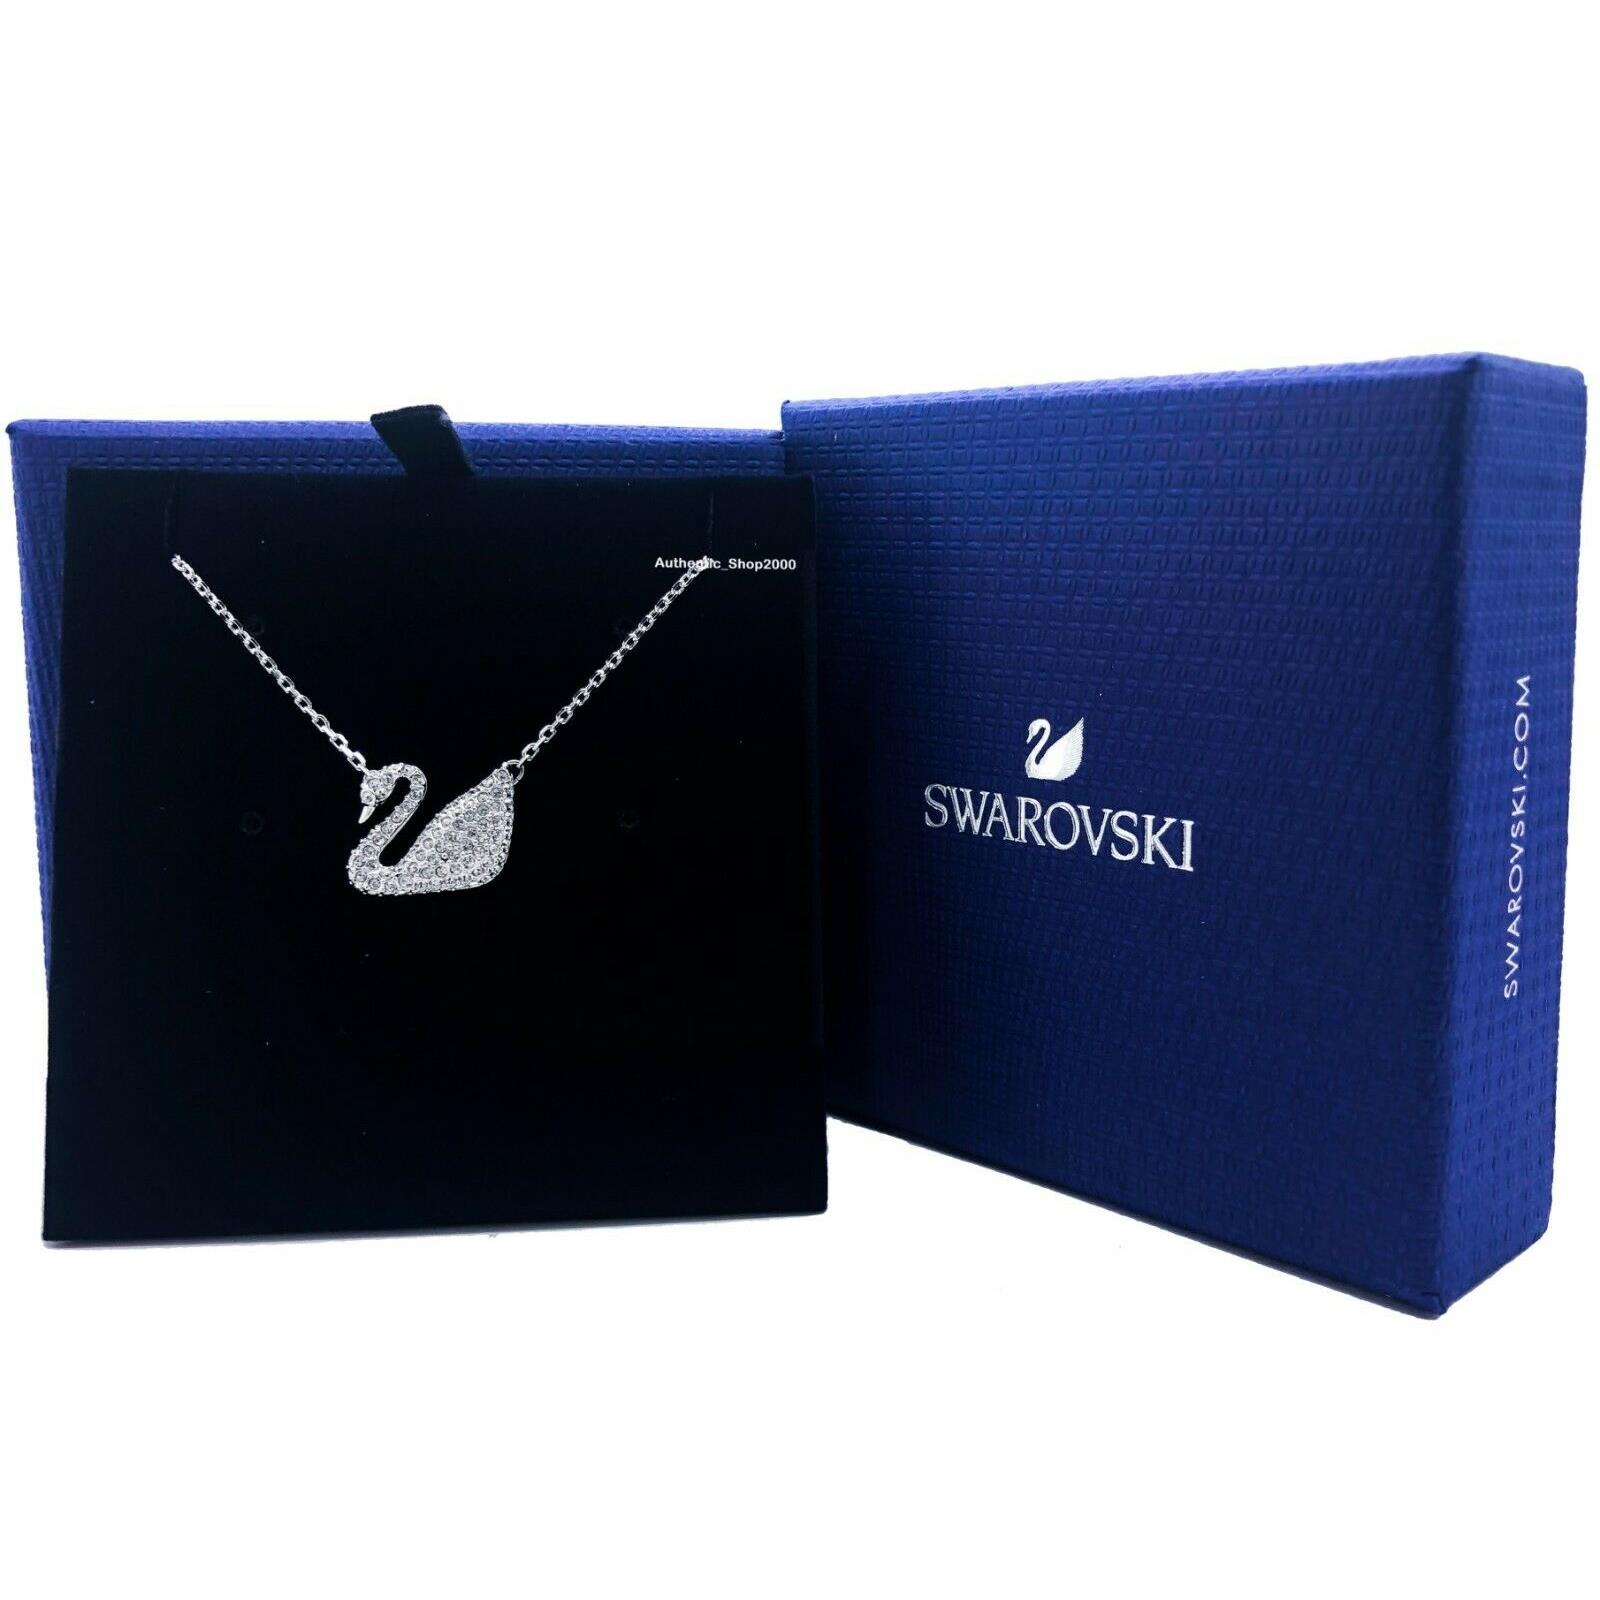 Swarovski Sparkle Crystal Iconic Swan Pendant Necklace 5007735